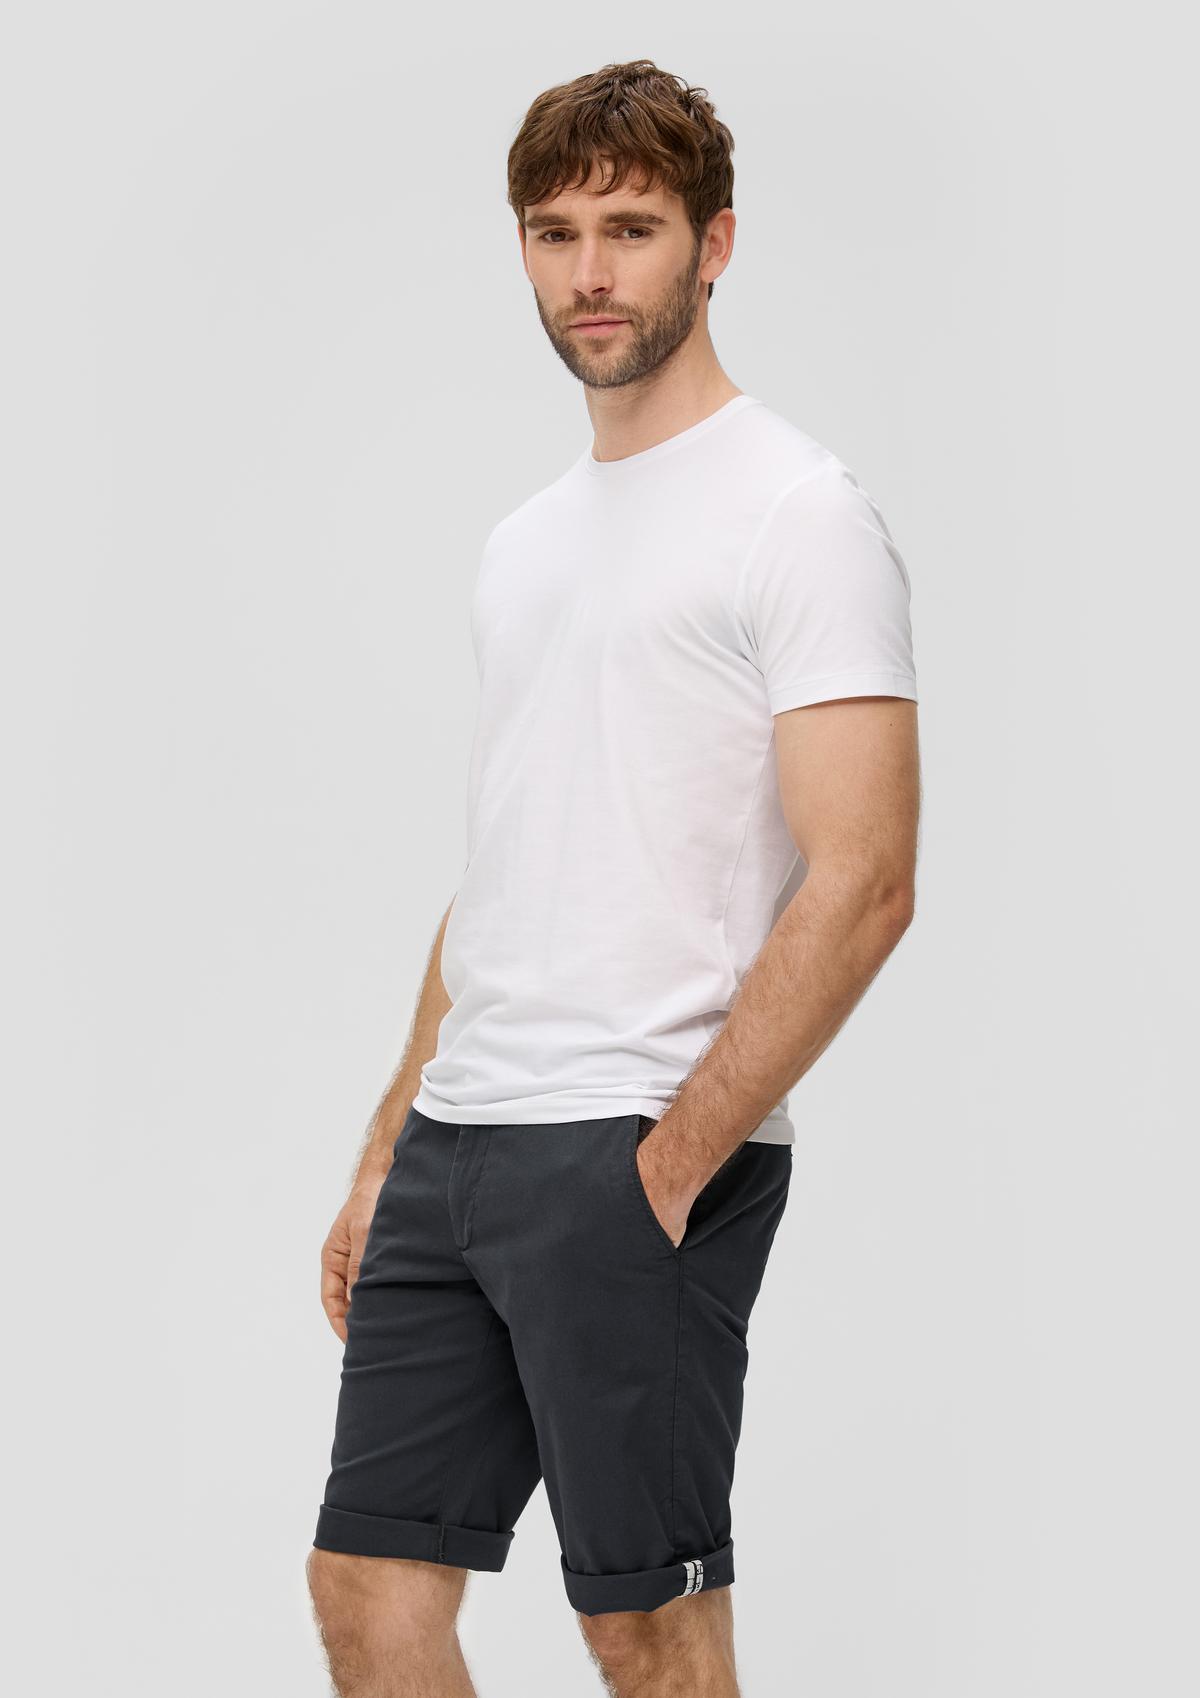 Phoenix Bermuda jeans / regular fit / mid rise / straight leg